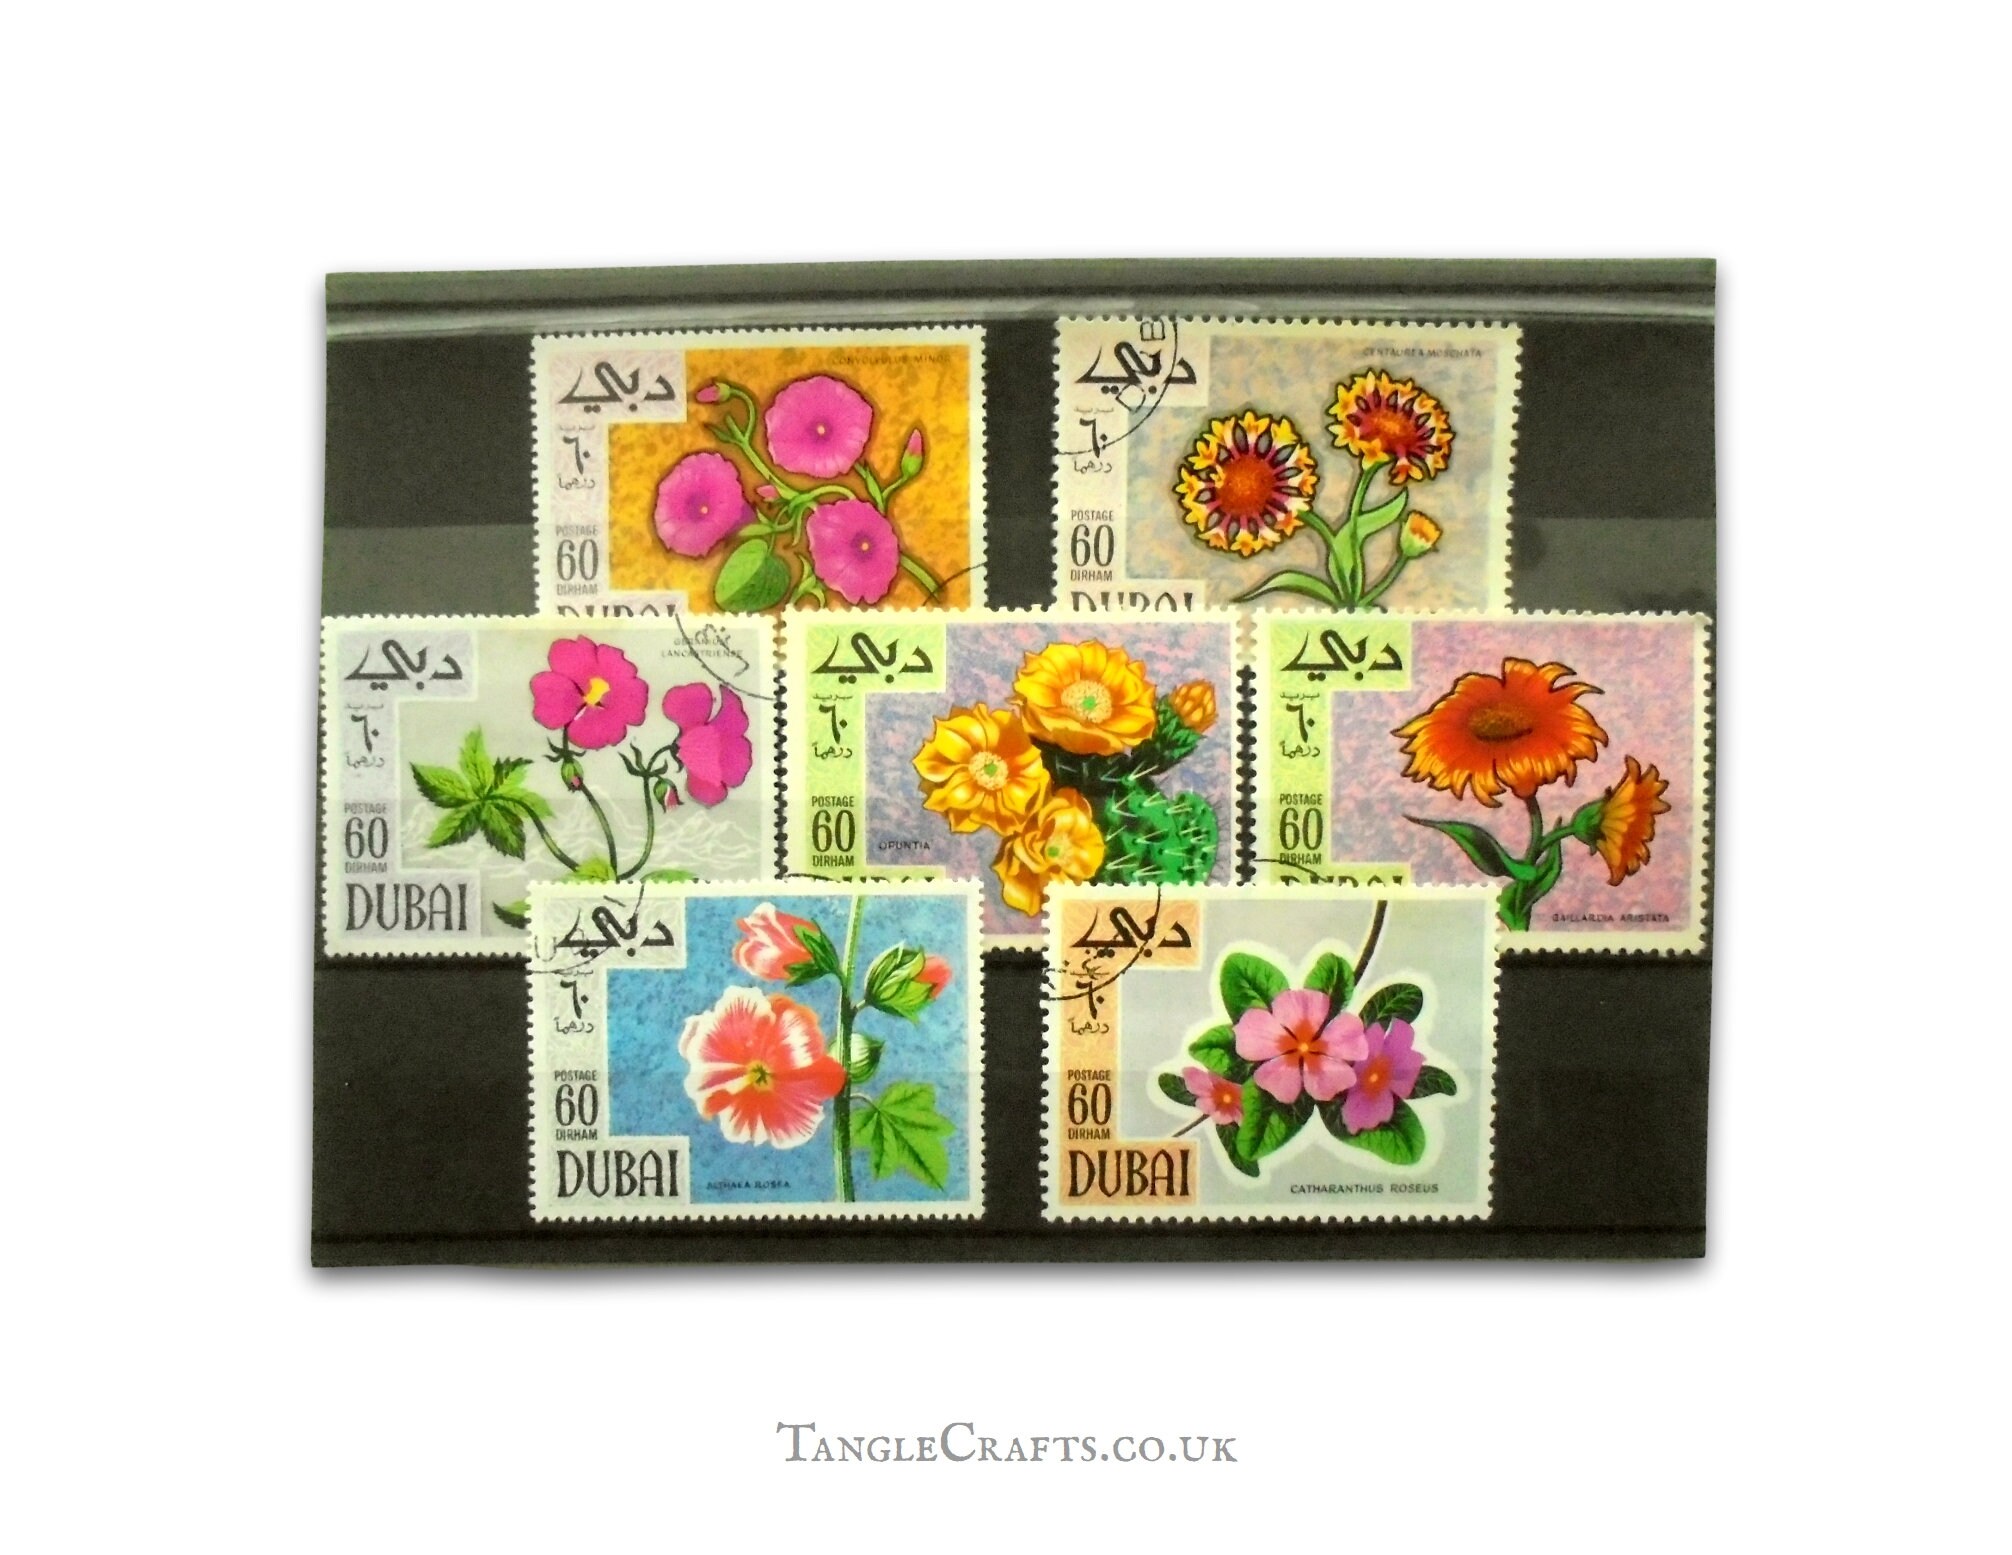 Czechoslovakia Flowers Postage Stamp Set // 1990 Used Cancelled Postal Stamps // Snapdragon // Zinnia // Tiger Flower // Colourful Ephemera